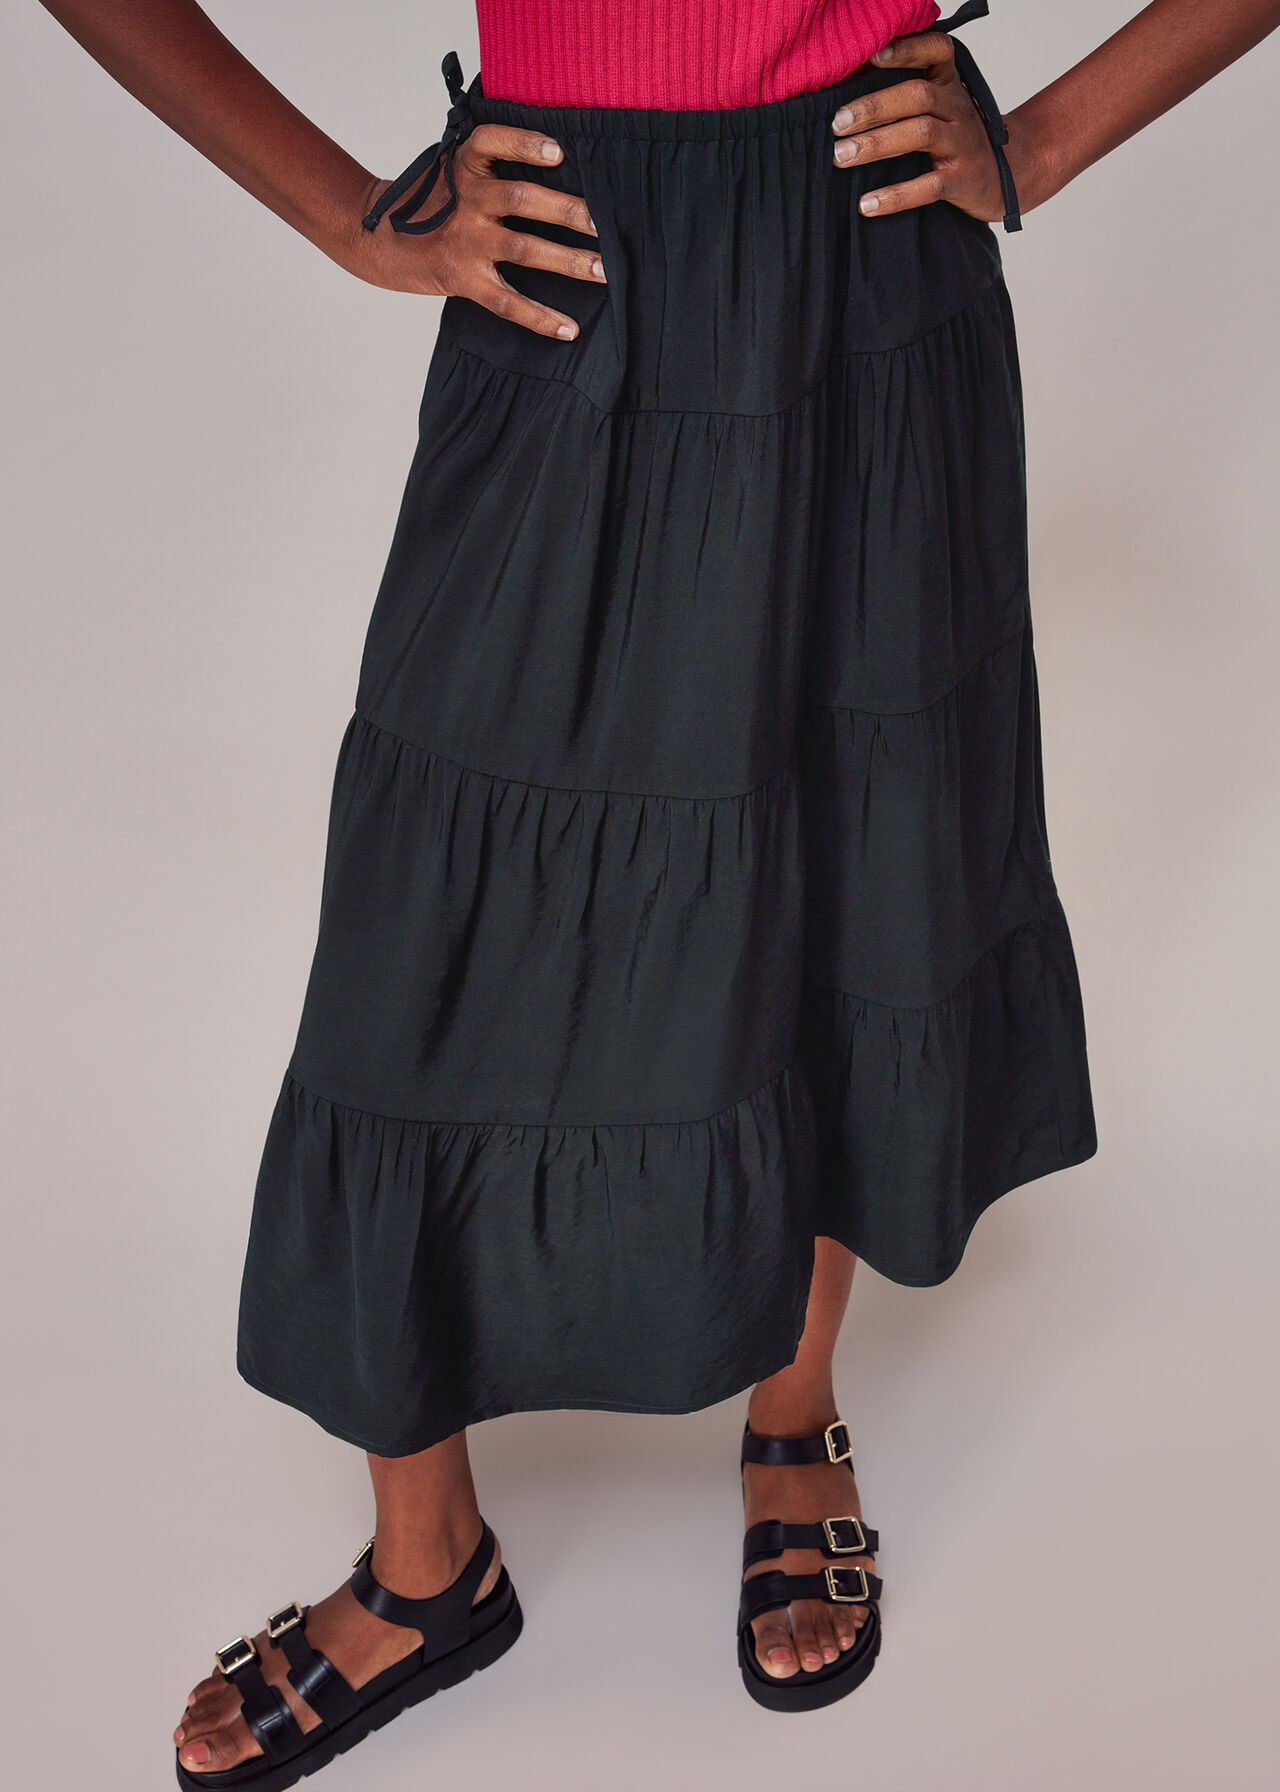 Black Tie Side Tiered Skirt | WHISTLES | Whistles UK